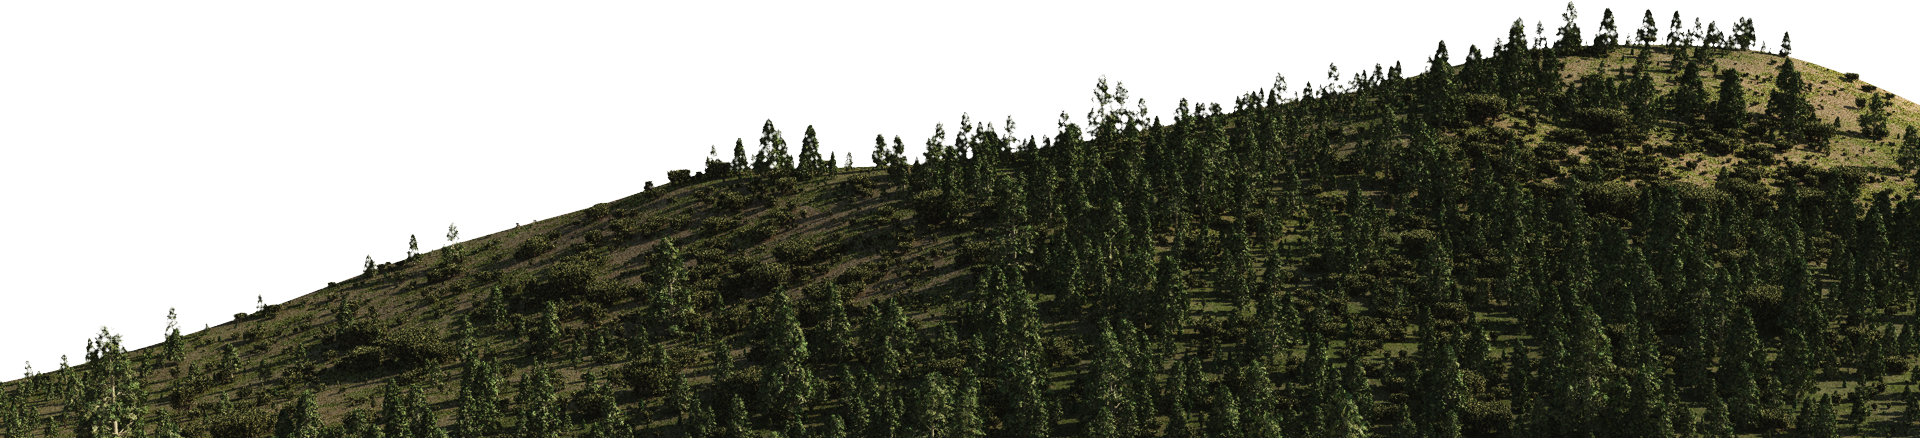 tree on mountain landscape transparent nature image #11955